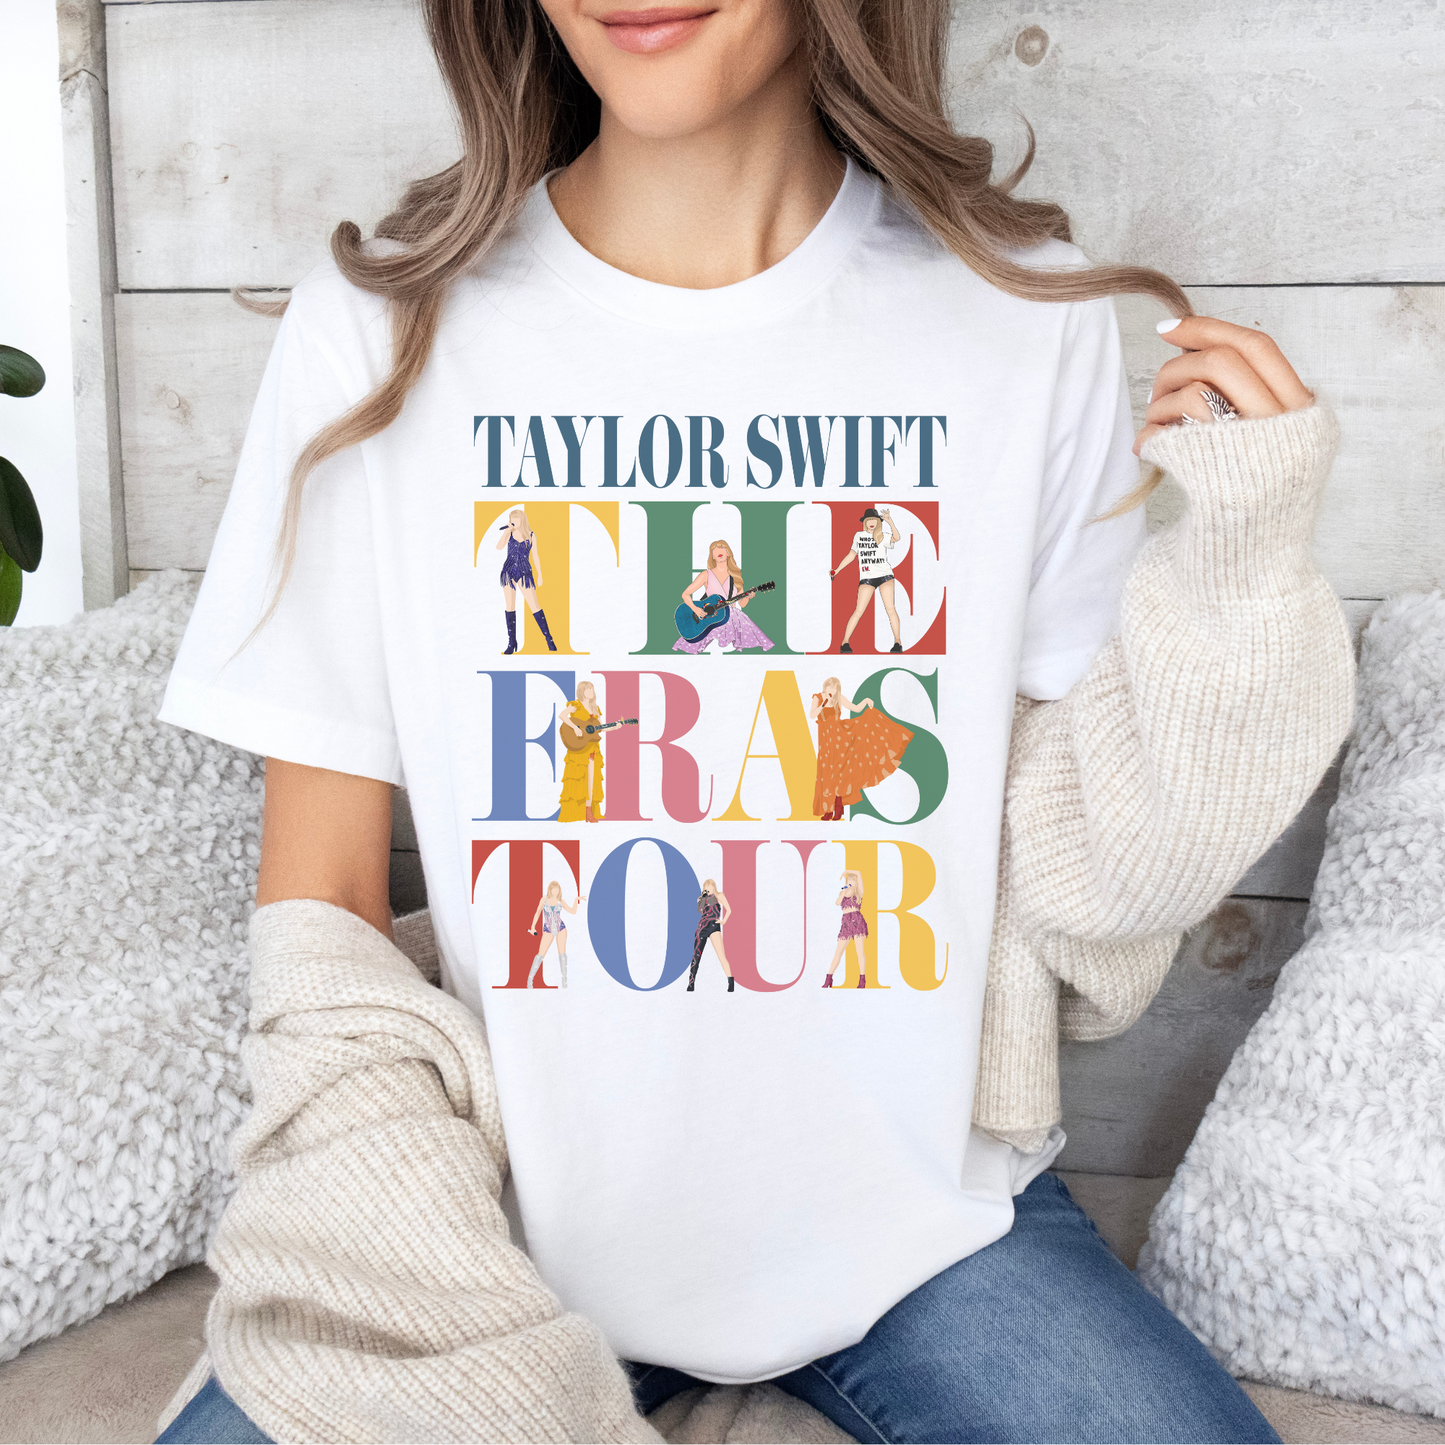 The Eras Tour Outfits Taylor Swift T-Shirt